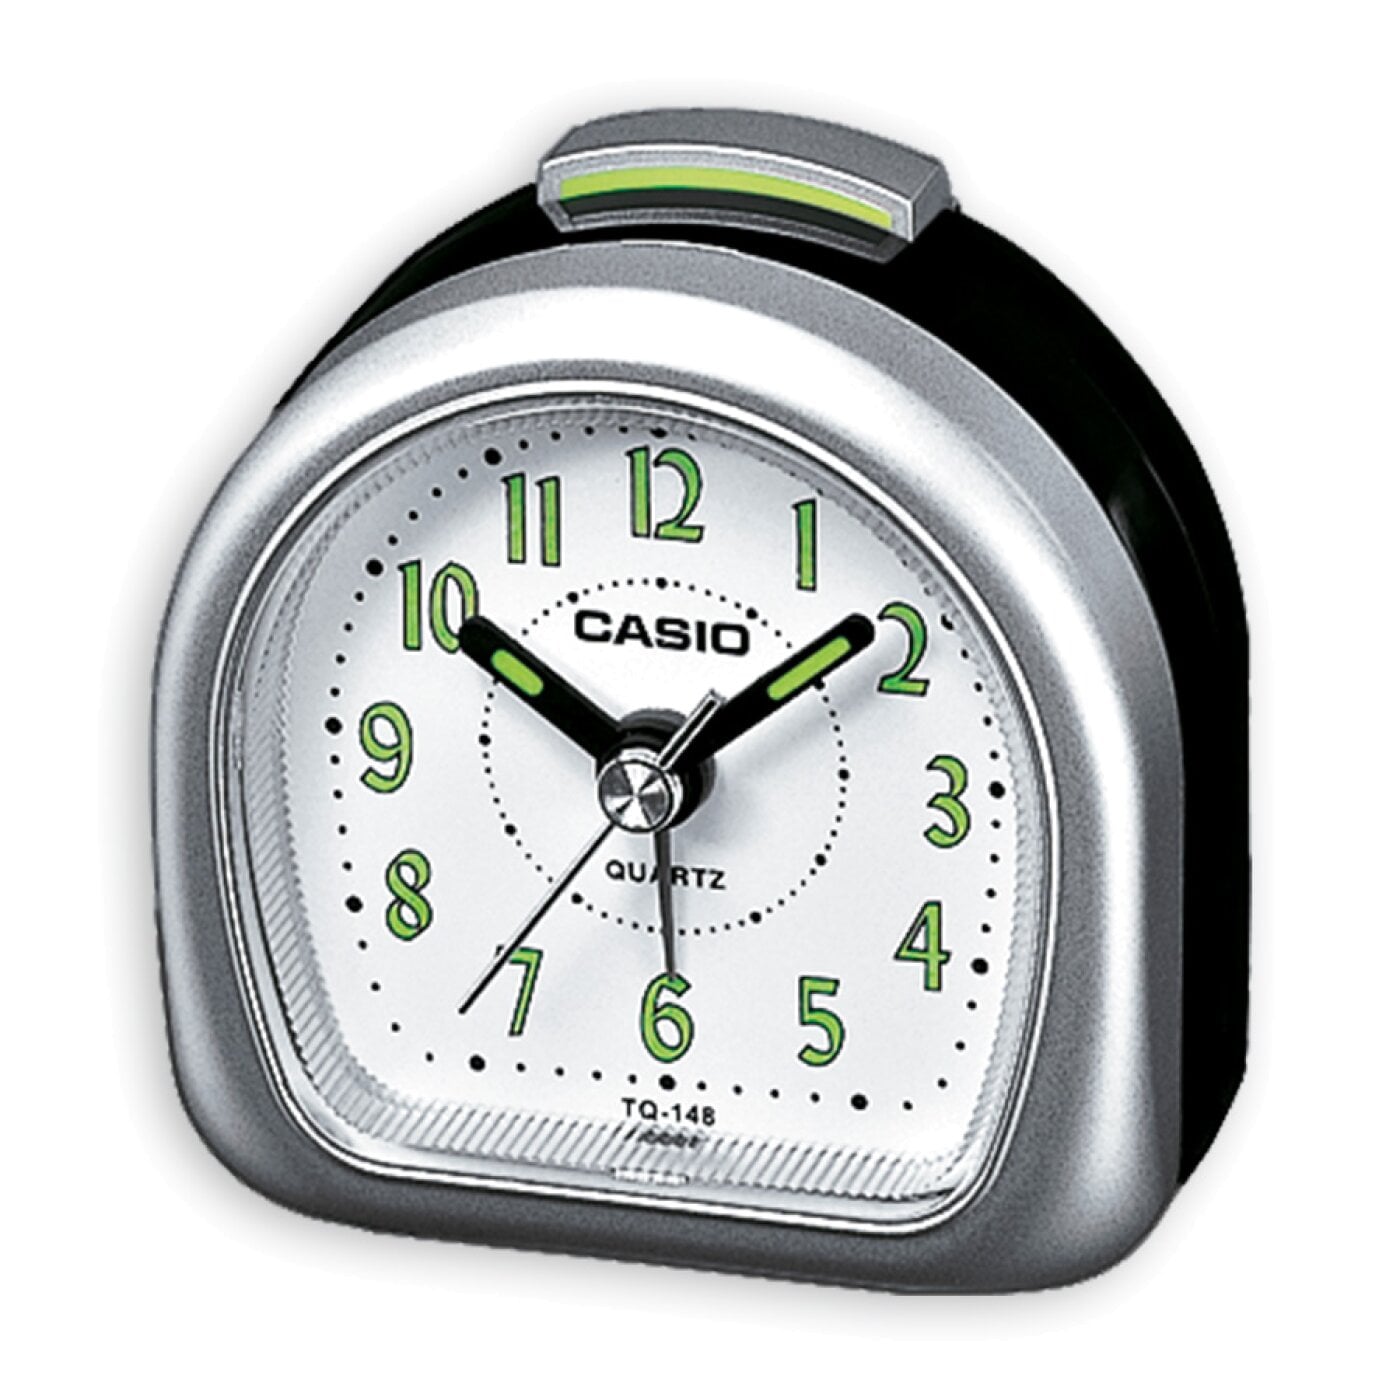 Casio Collection Timer Digitale Sveglia Argento, Resina, Grigio